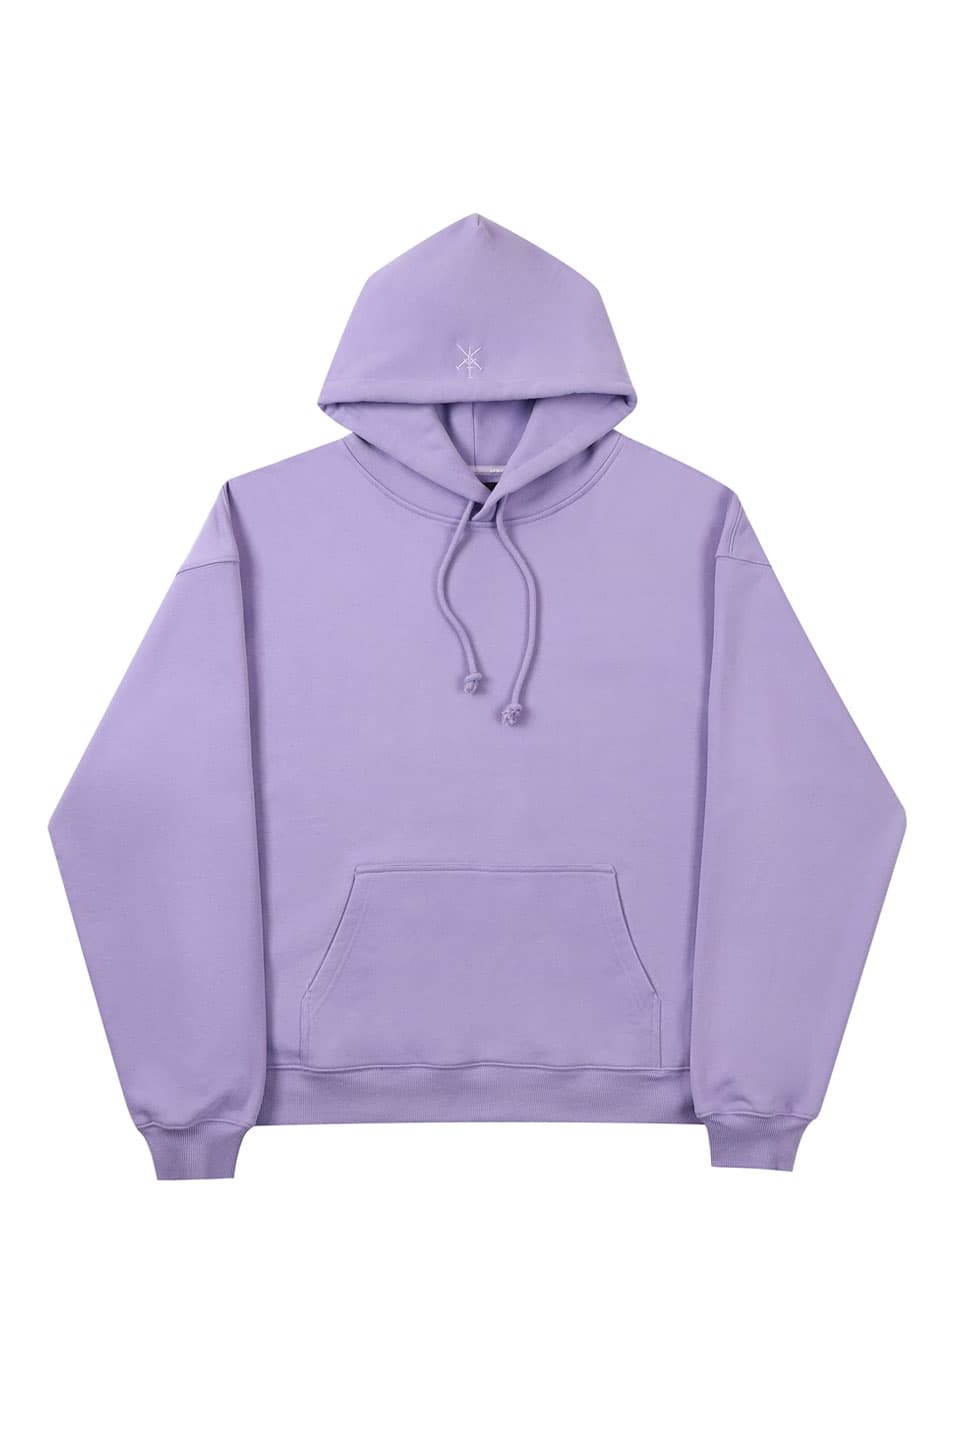 unknown 紫　パーカーpurple hoodie XL